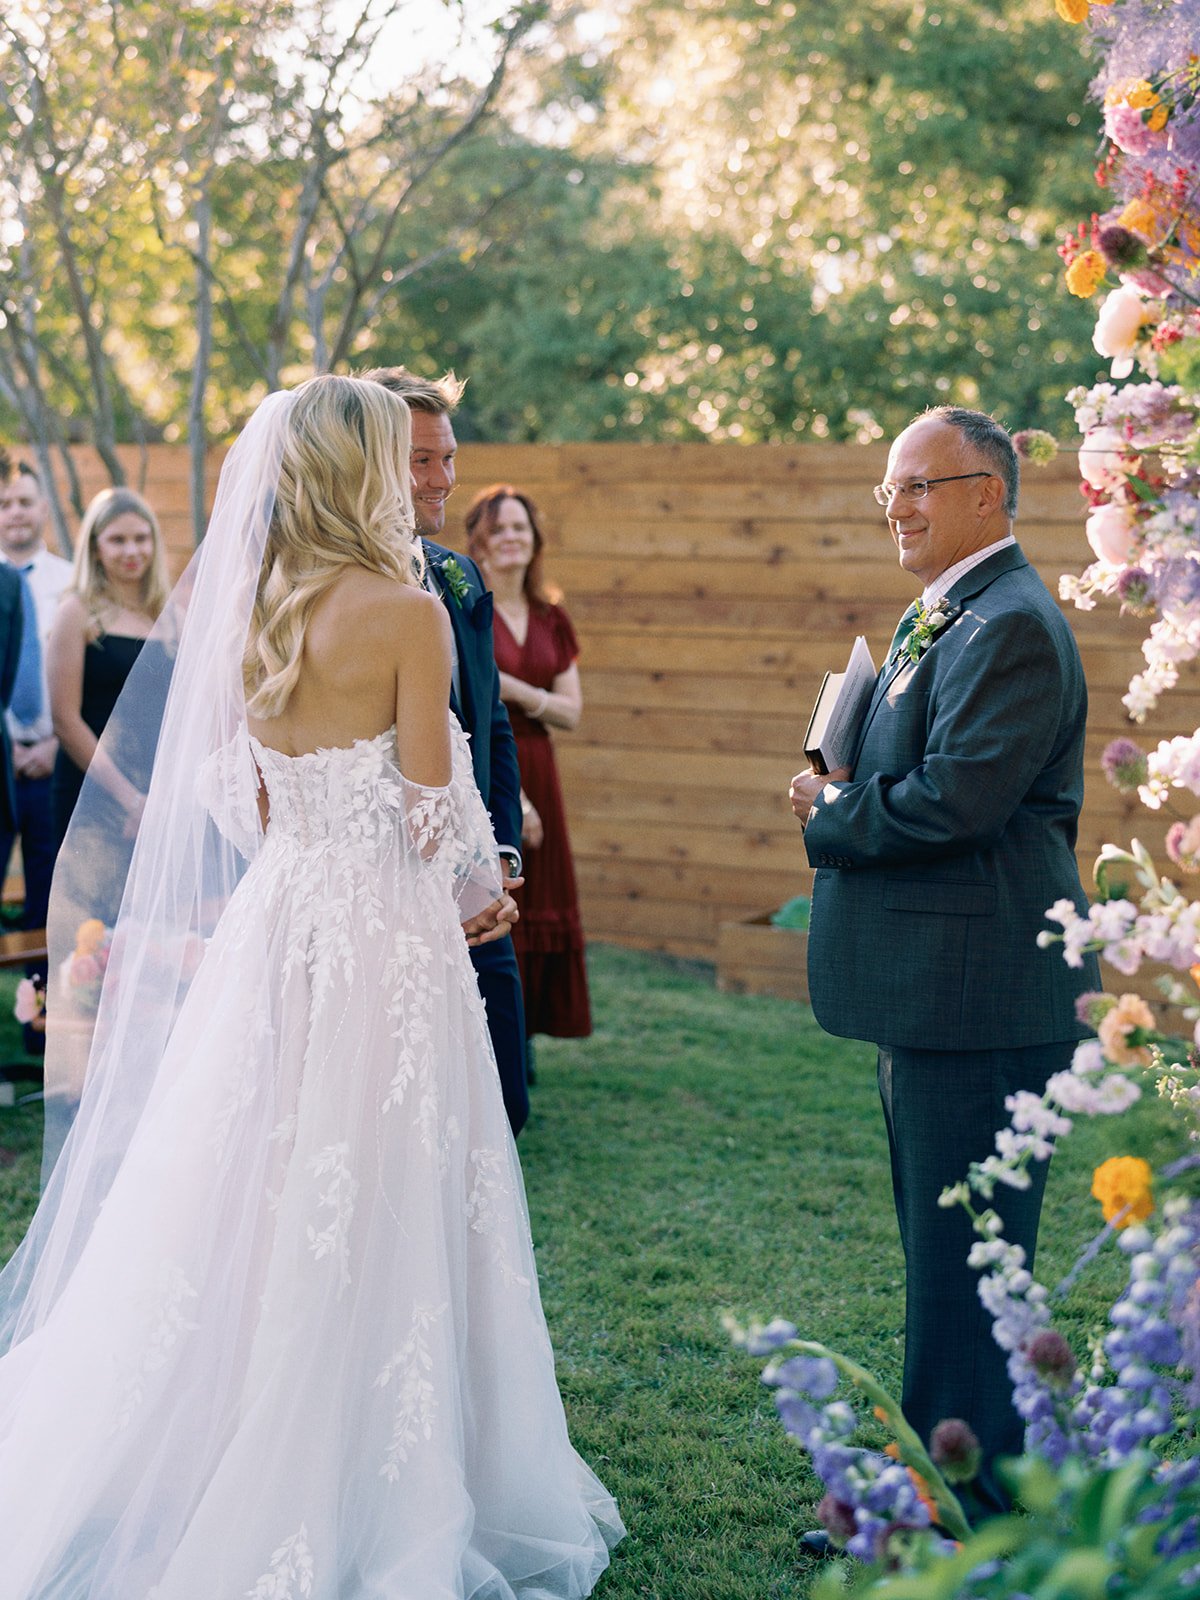 Best-Austin-Wedding-Photographers-Elopement-Film-35mm-Asheville-Santa-Barbara-Backyard-32.jpg